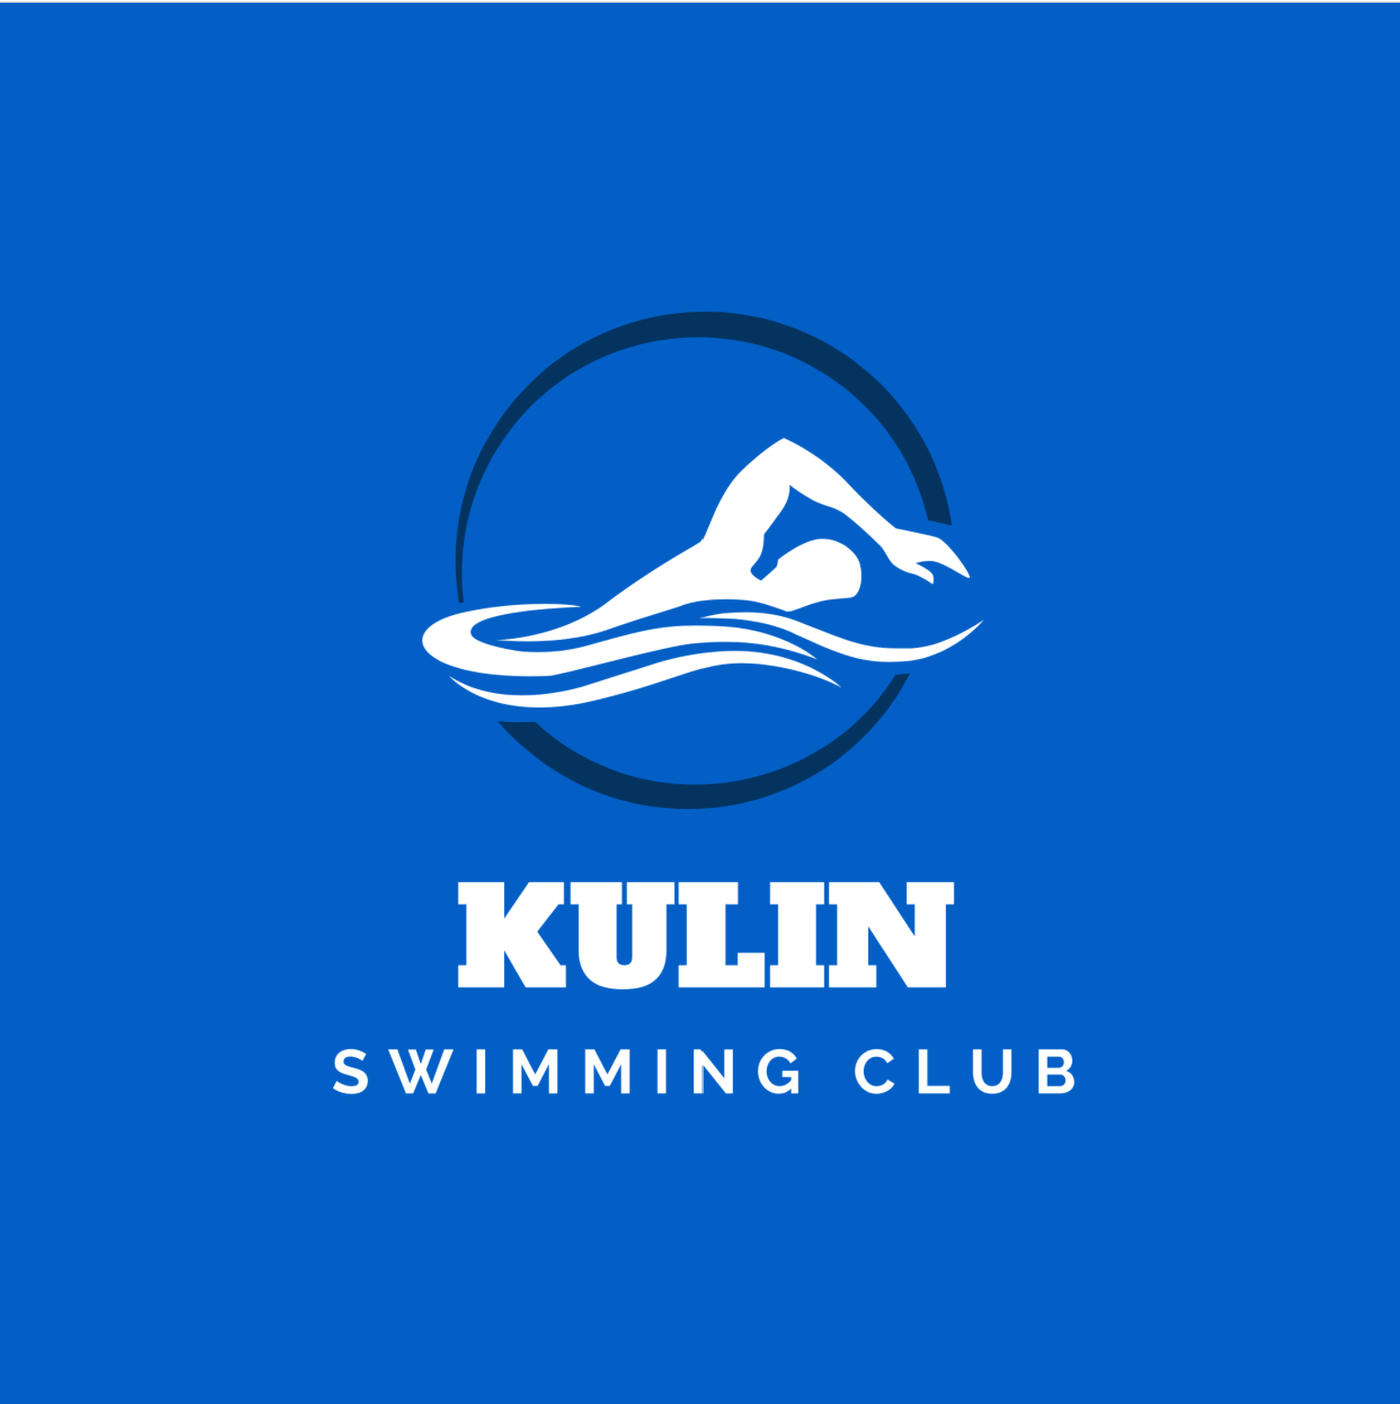 Kulin Swimming Club - The Good Human Factory